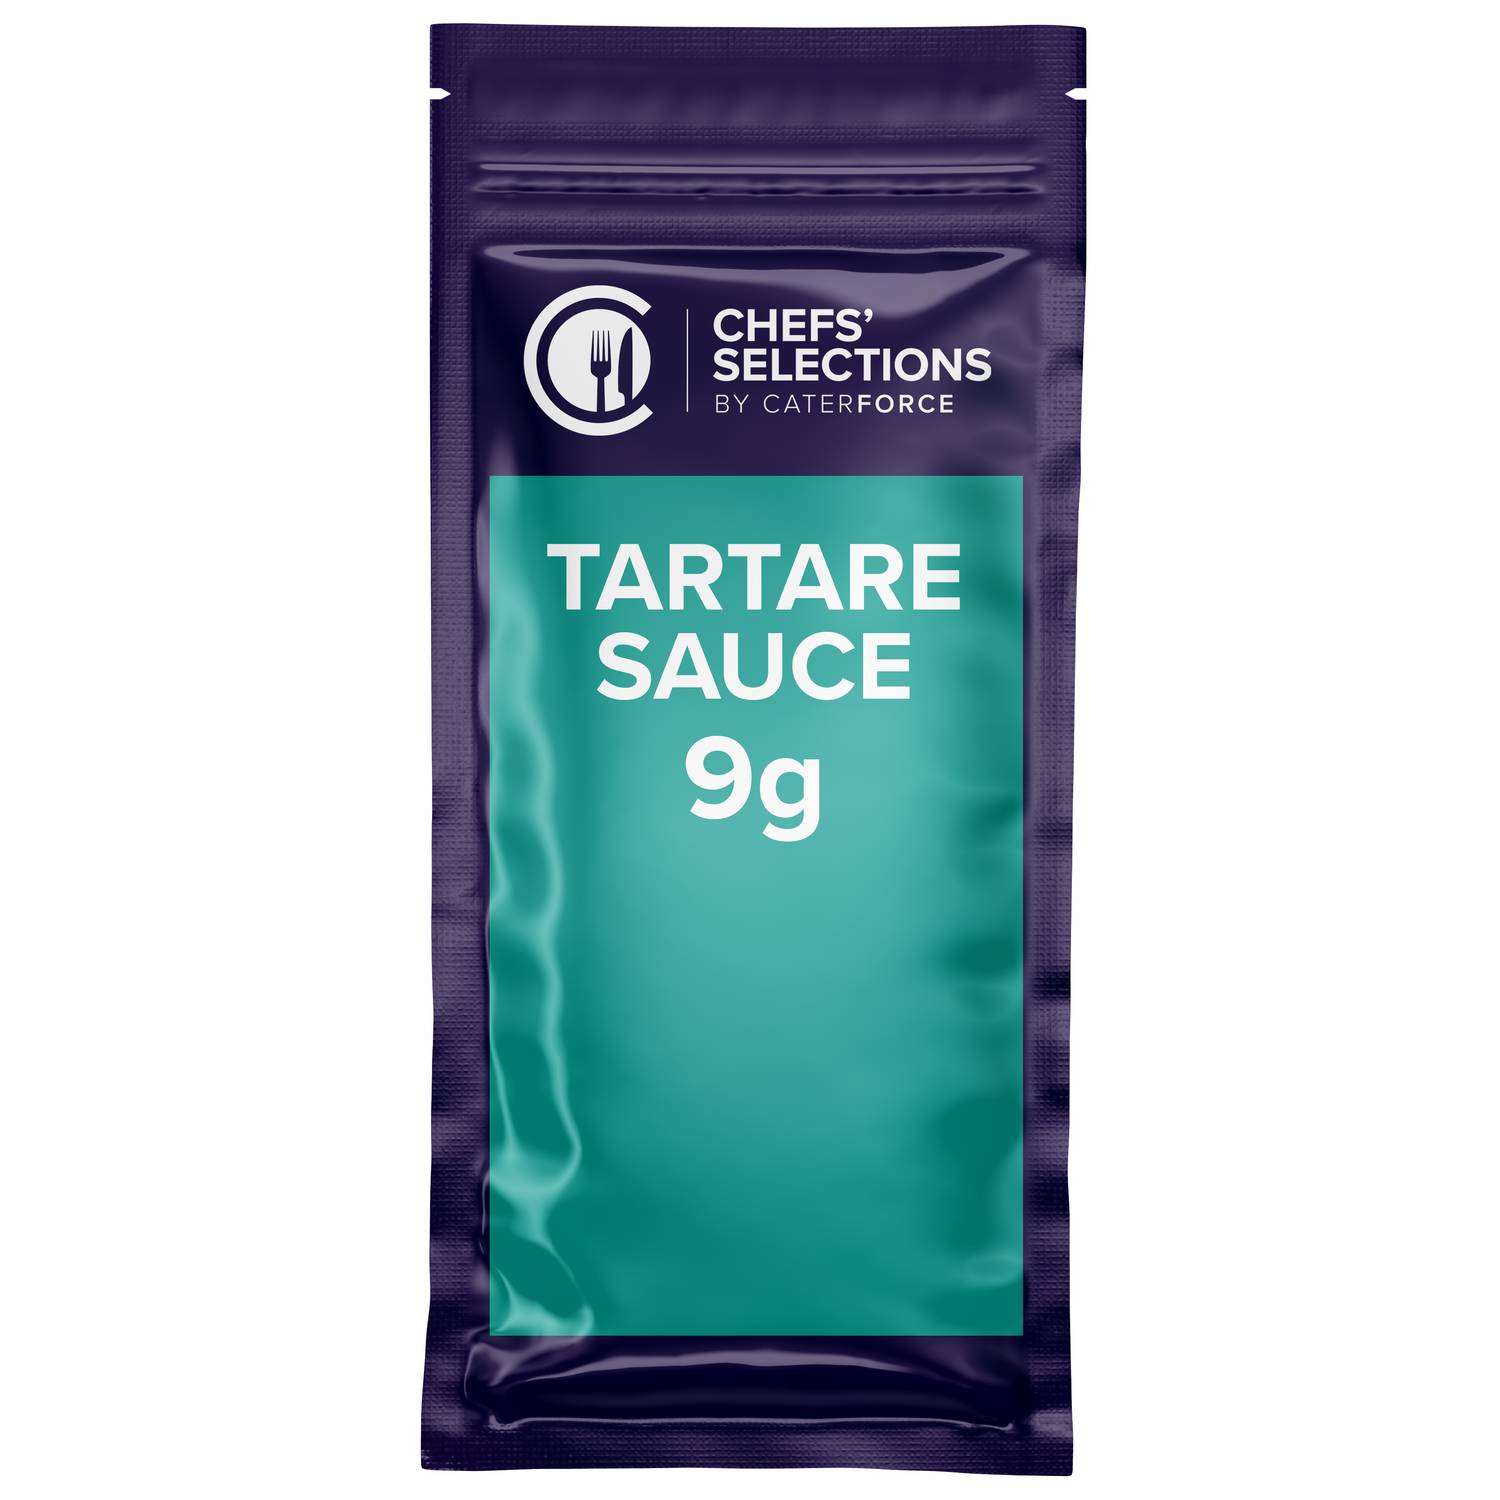 Chefs’ Selections Tartare Sauce Sachet (200 x 9g)